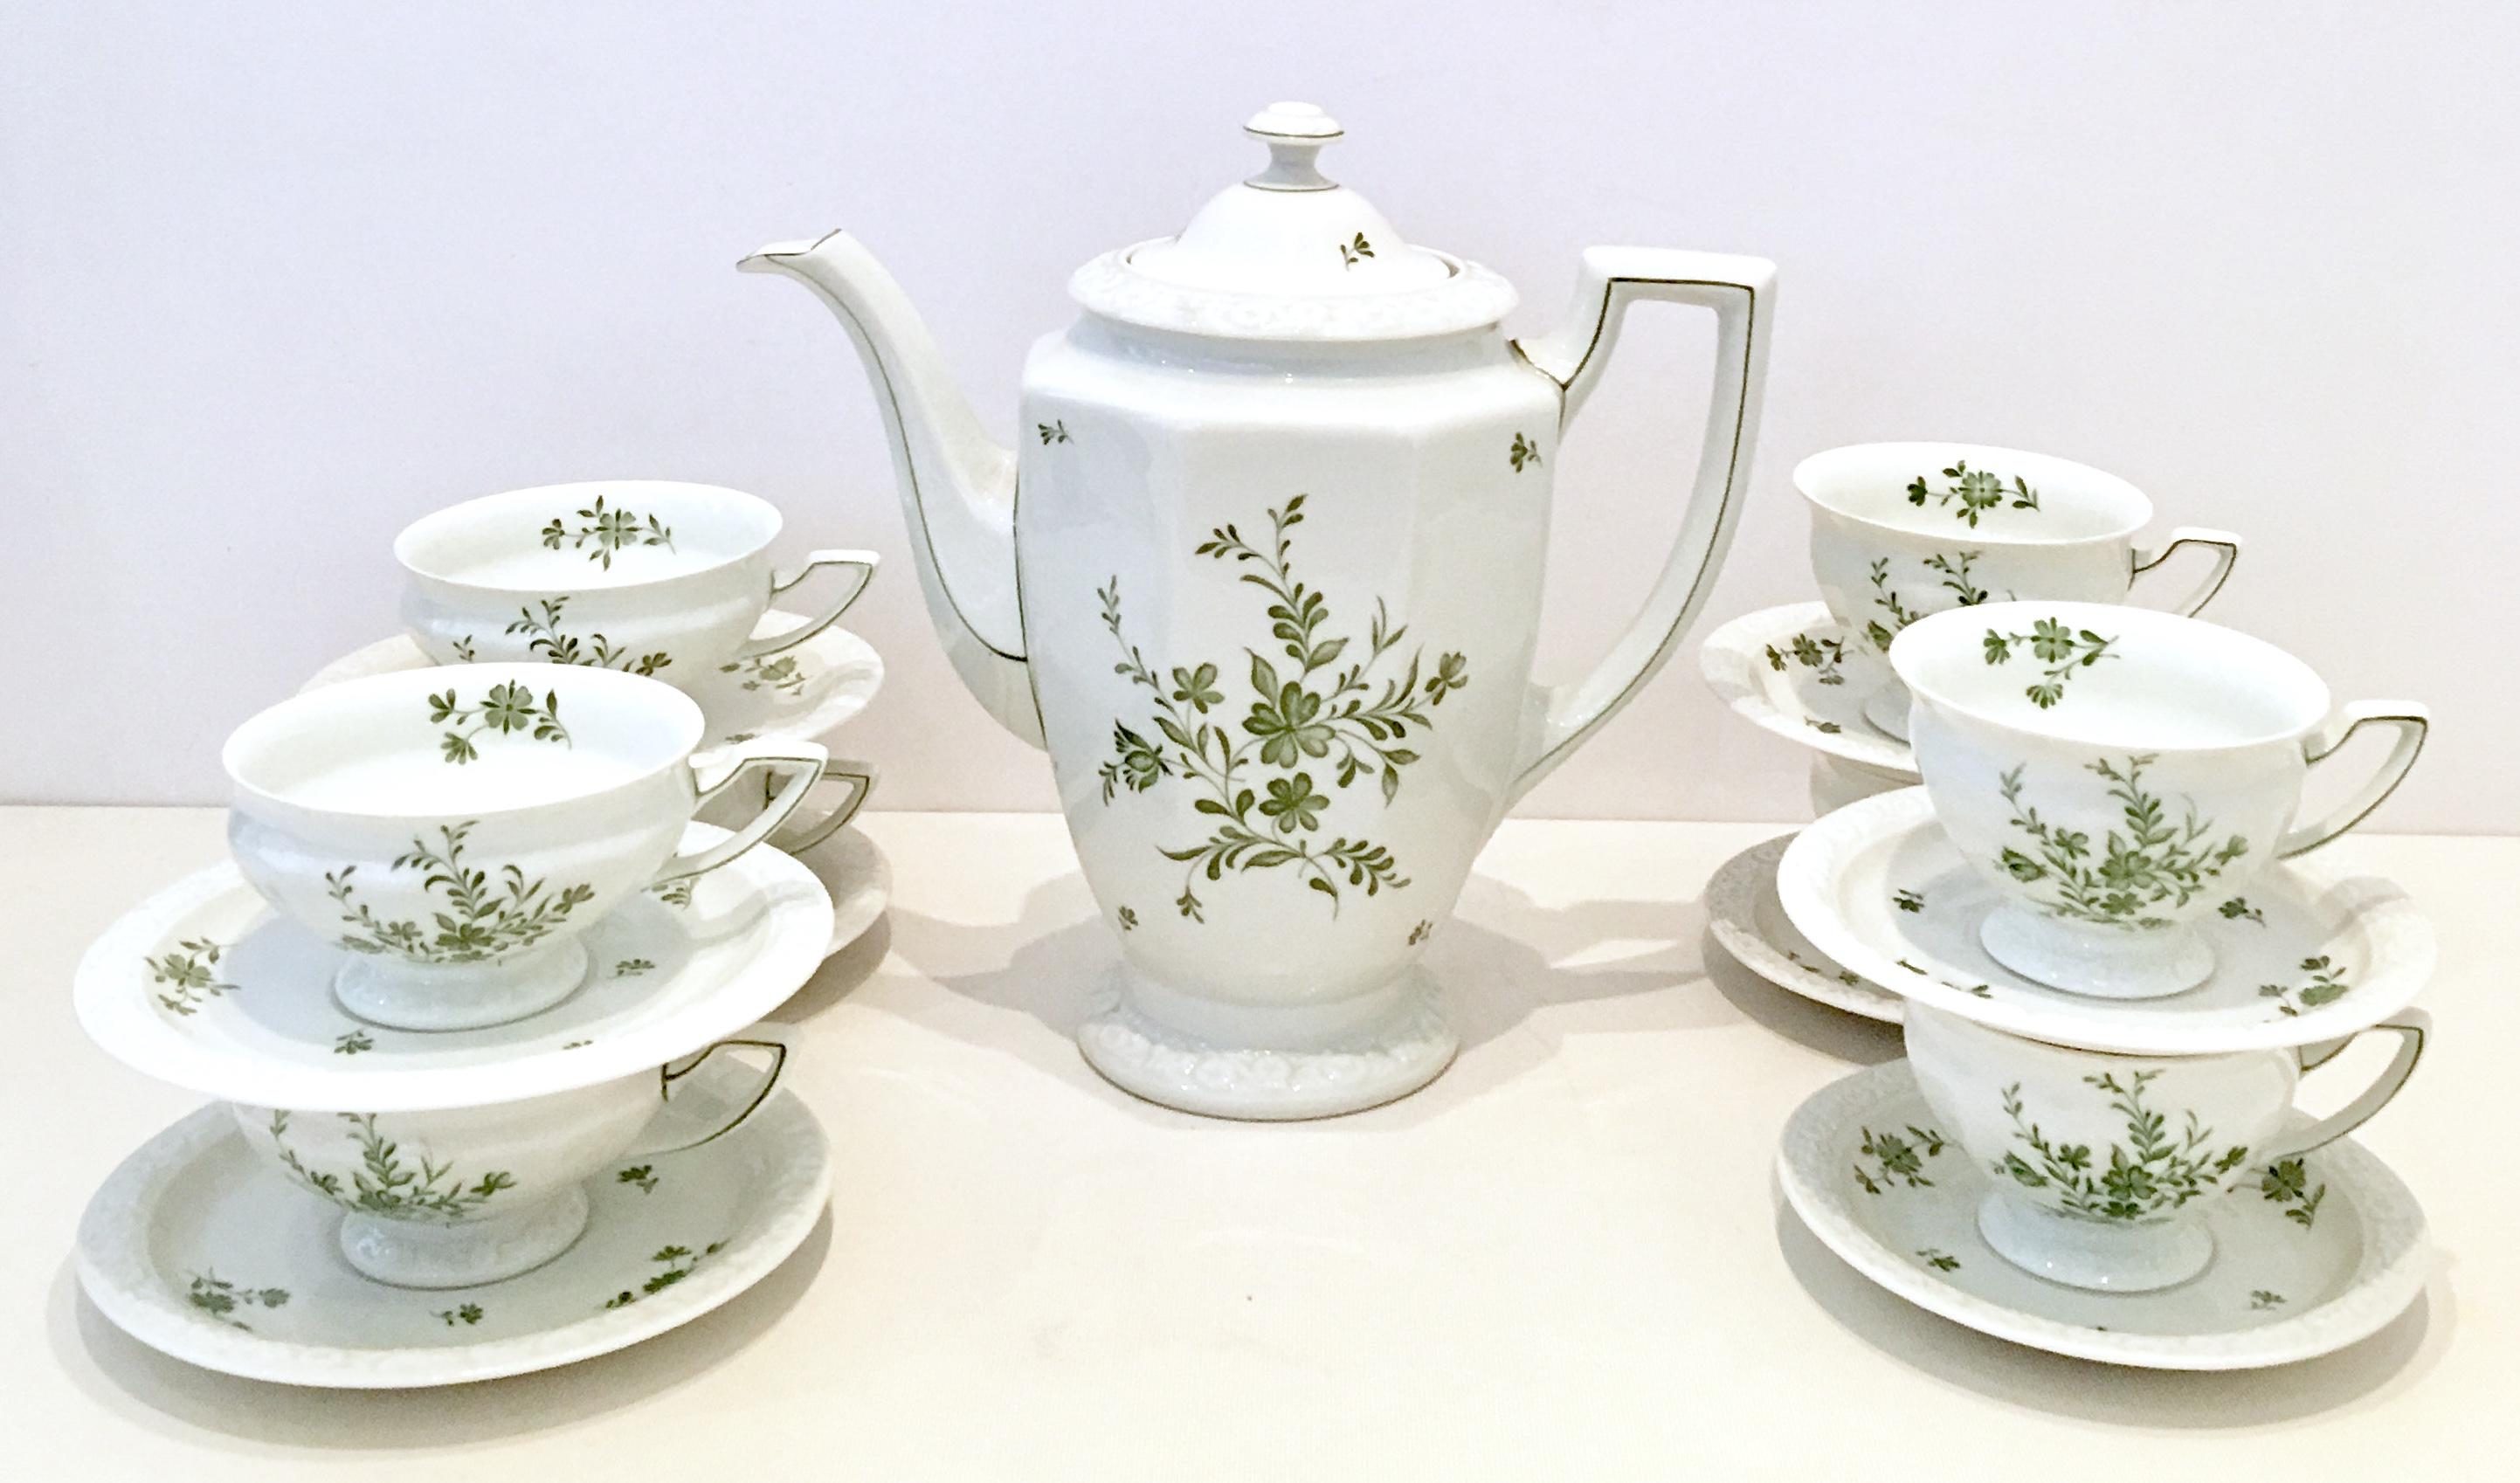 20th Century German porcelain tea/coffee set, 